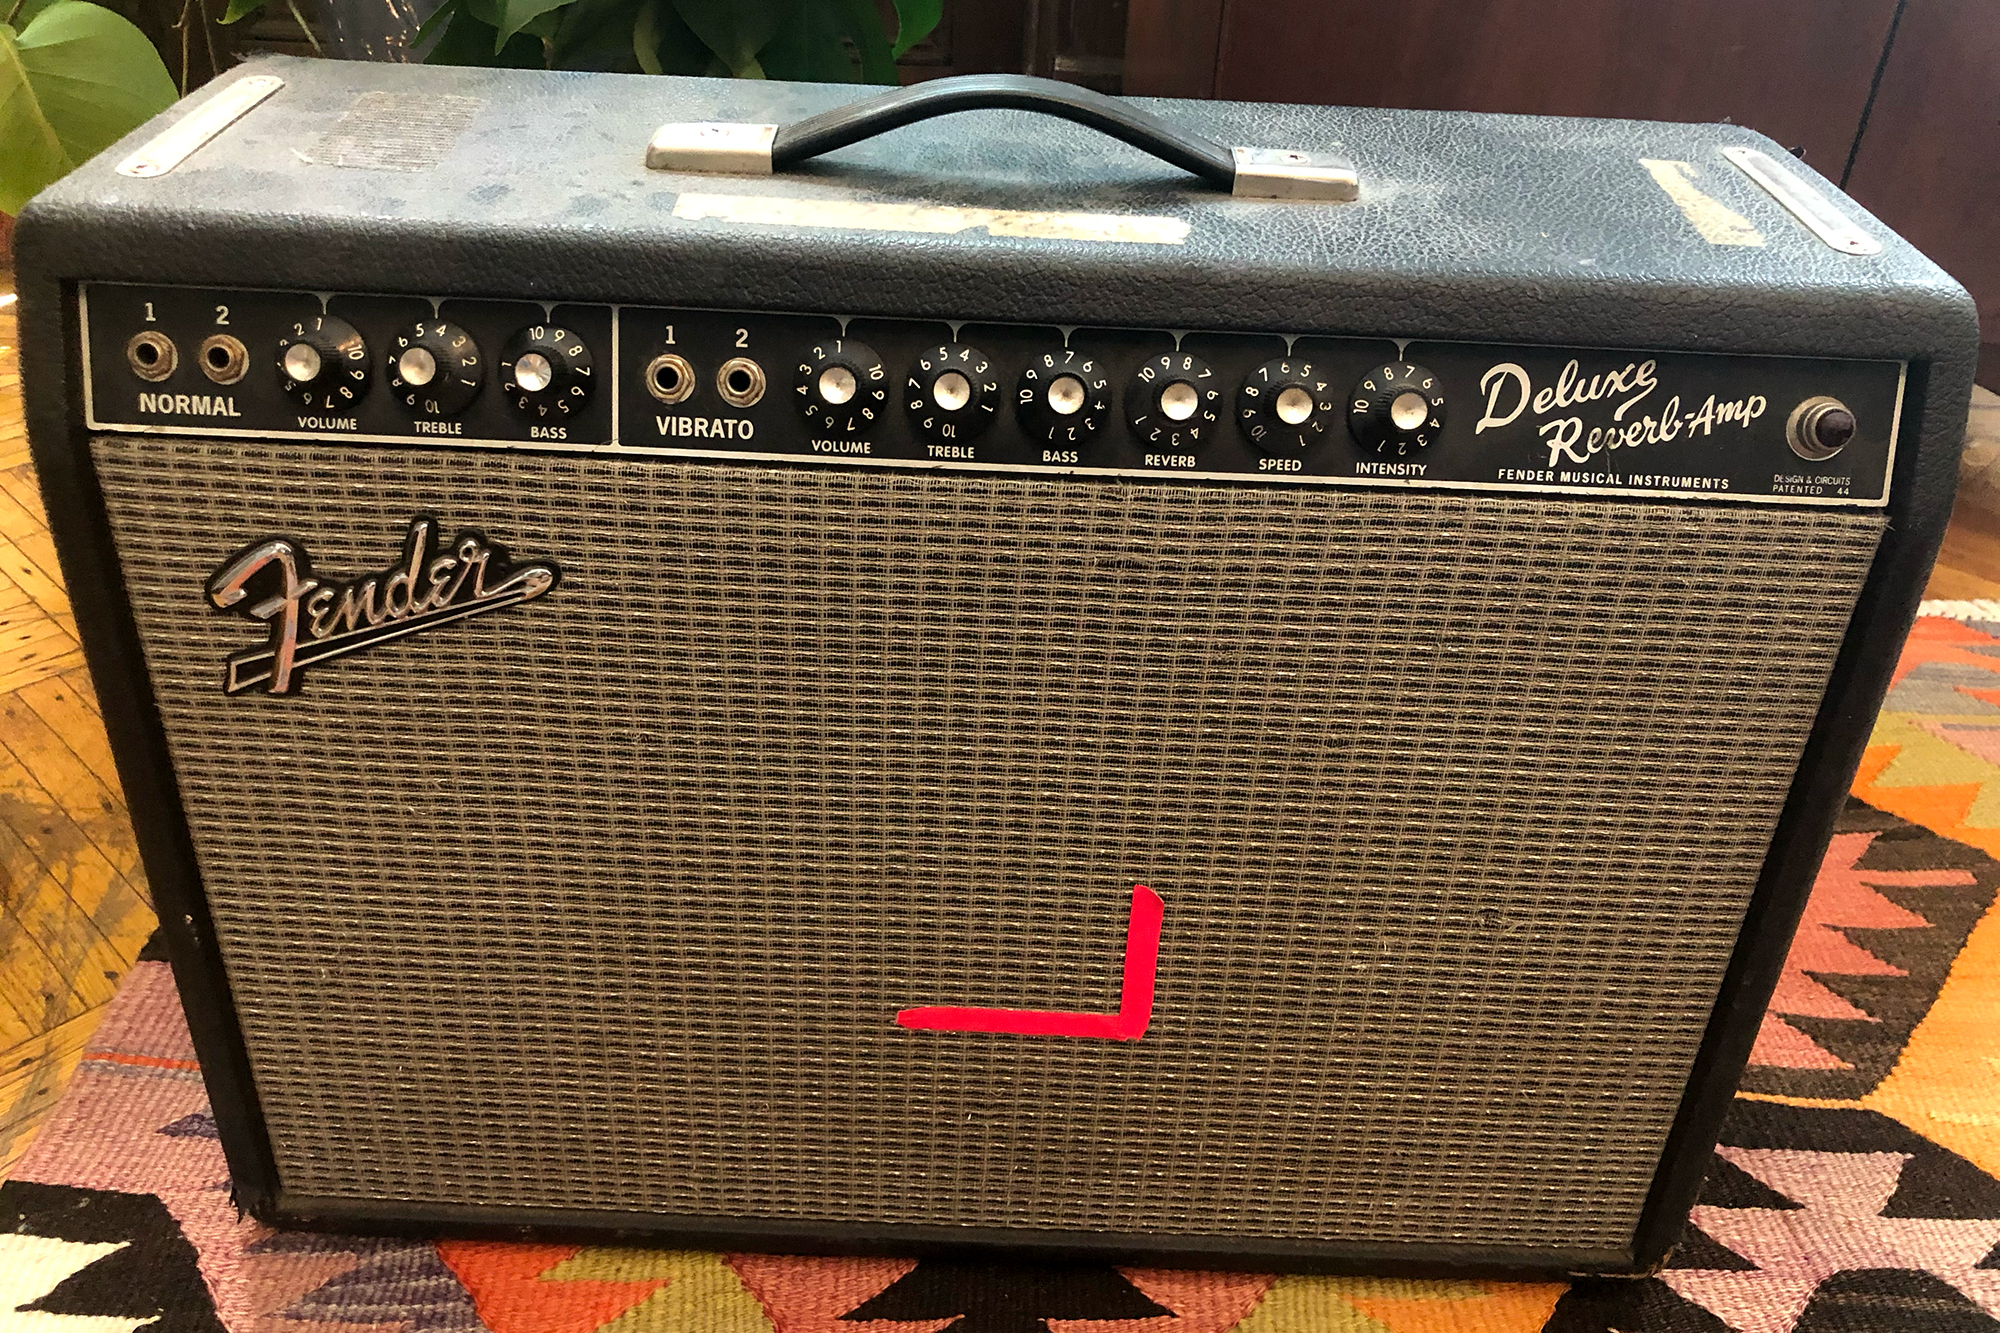 Beat-up Fender Deluxe Reverb guitar amp on a Southwestern carpet